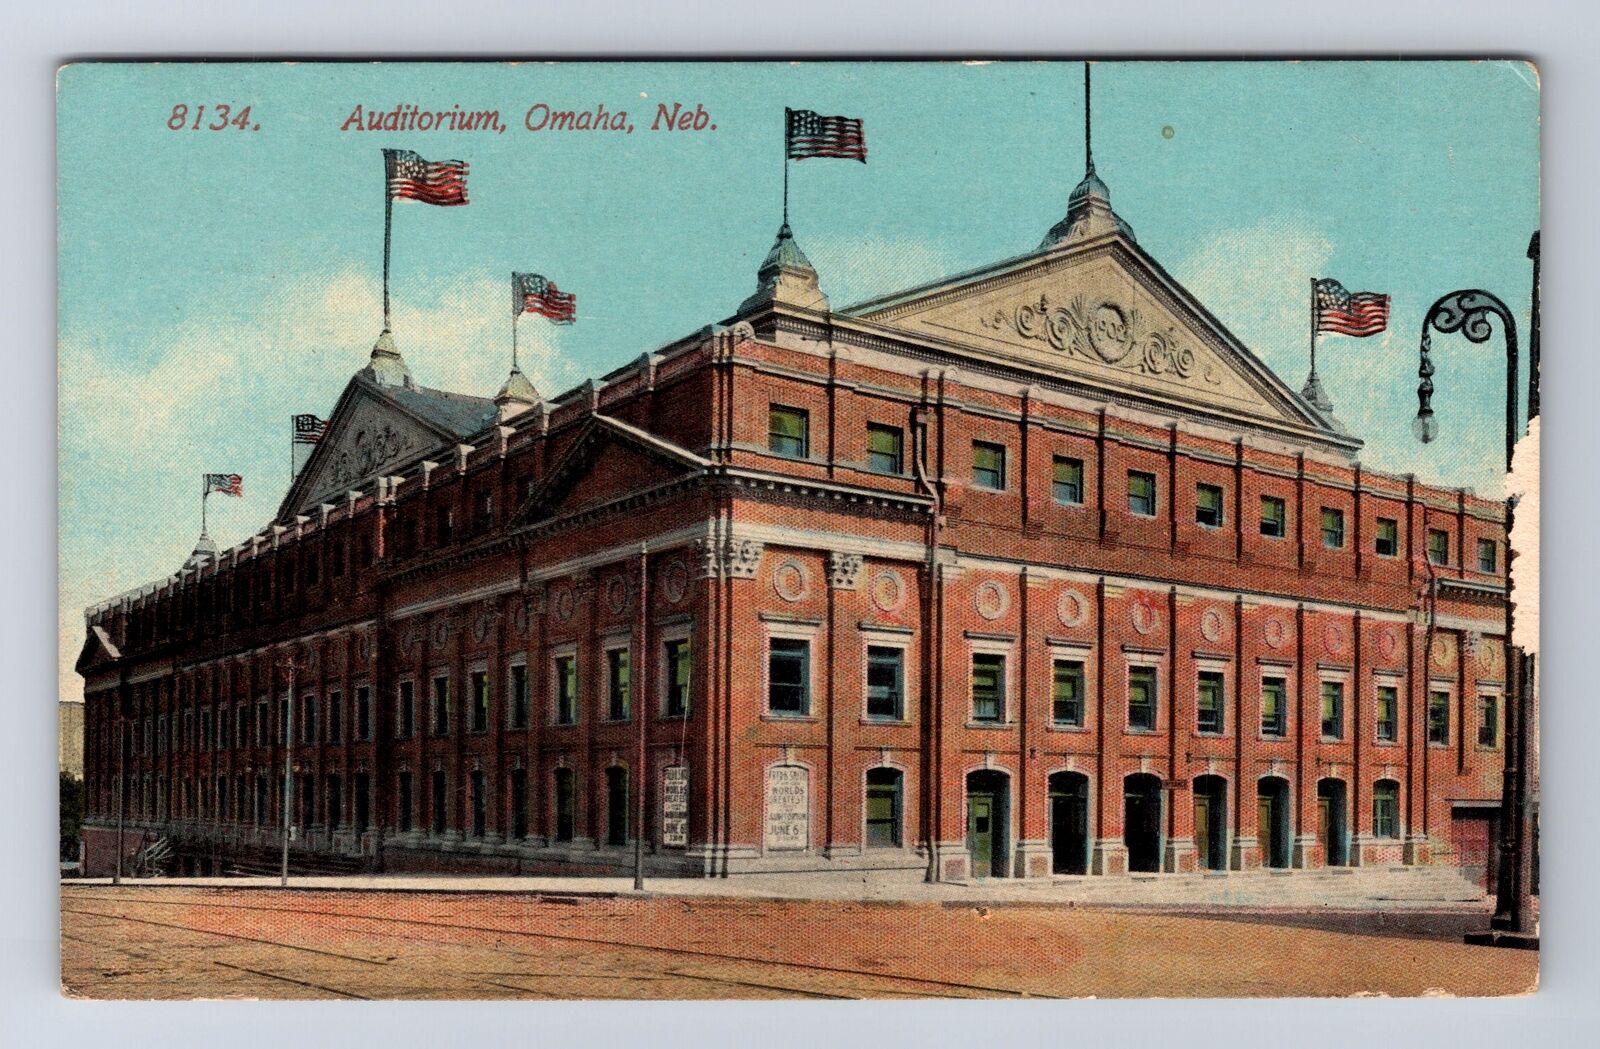 Omaha NE-Nebraska, Auditorium, Antique, Vintage Souvenir Postcard